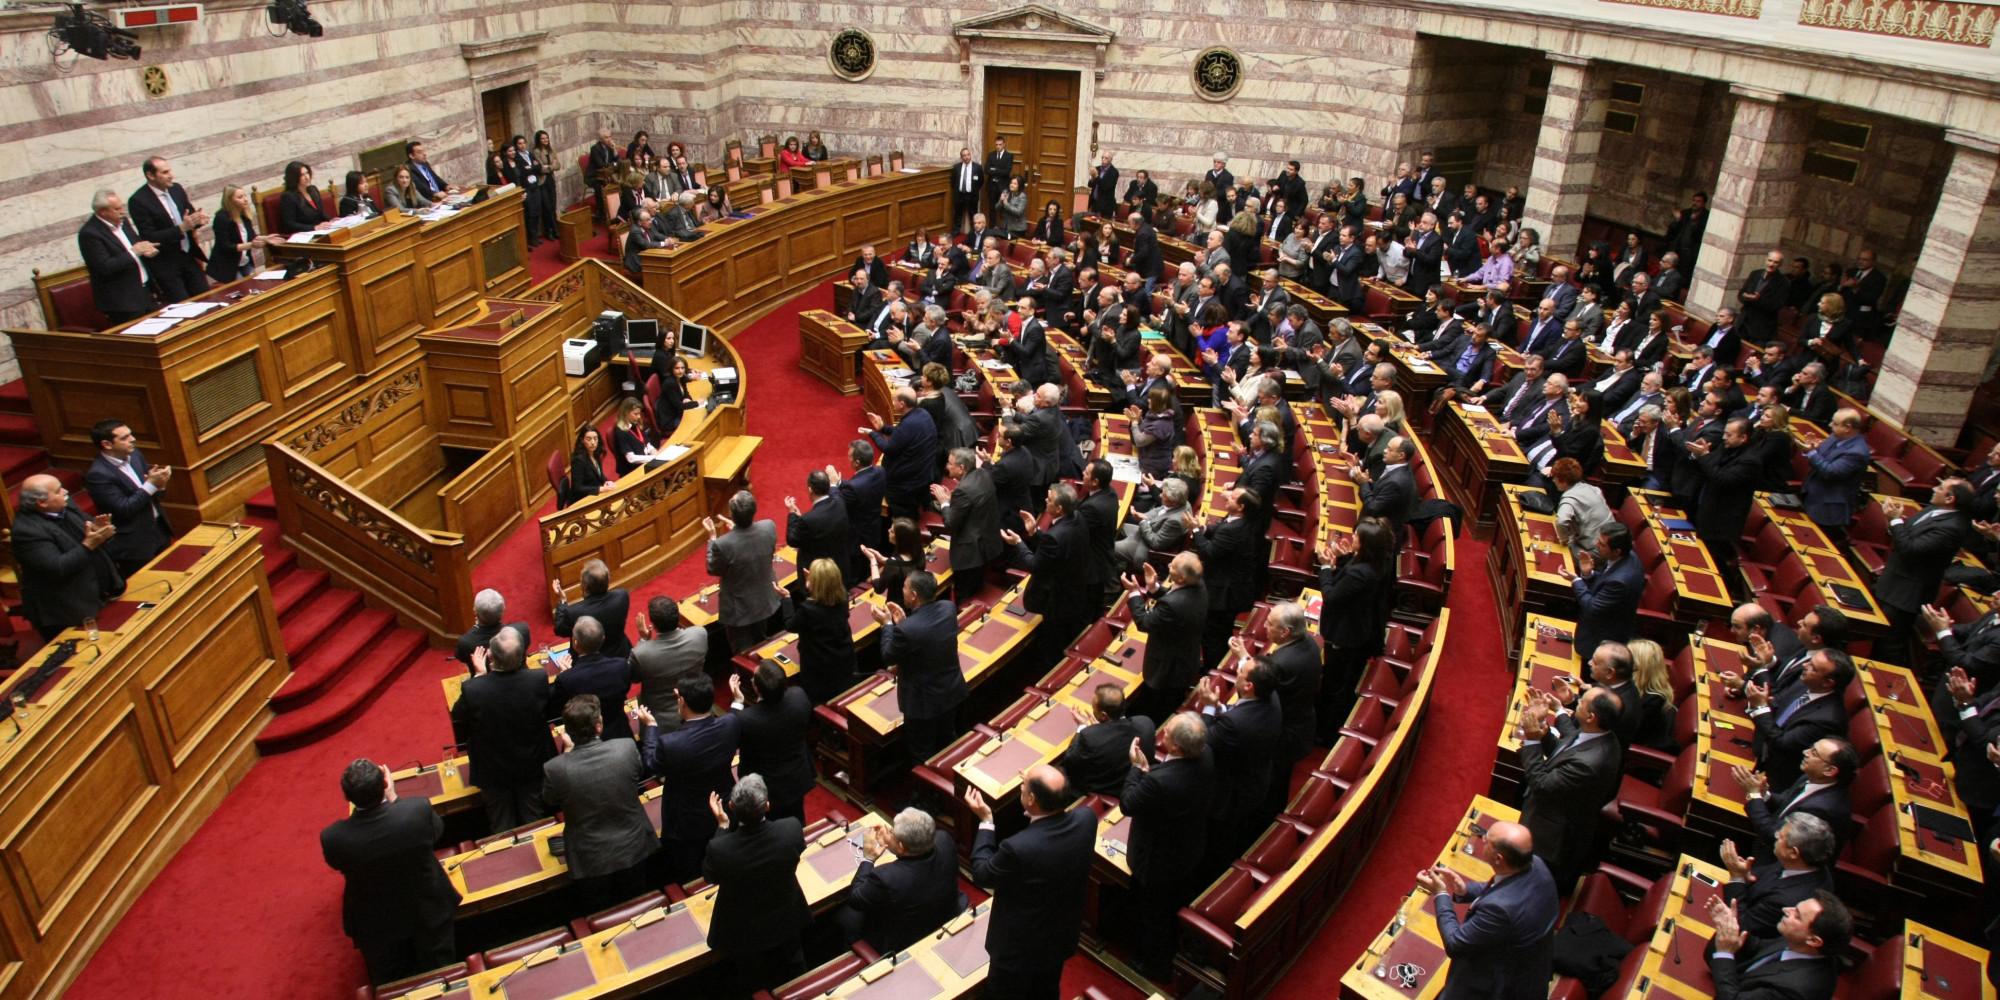 Live: Η ορκομωσία στην Βουλή – Προσέρχονται οι βουλευτές -Ποιο είναι το τυπικό που θα ακολουθηθεί